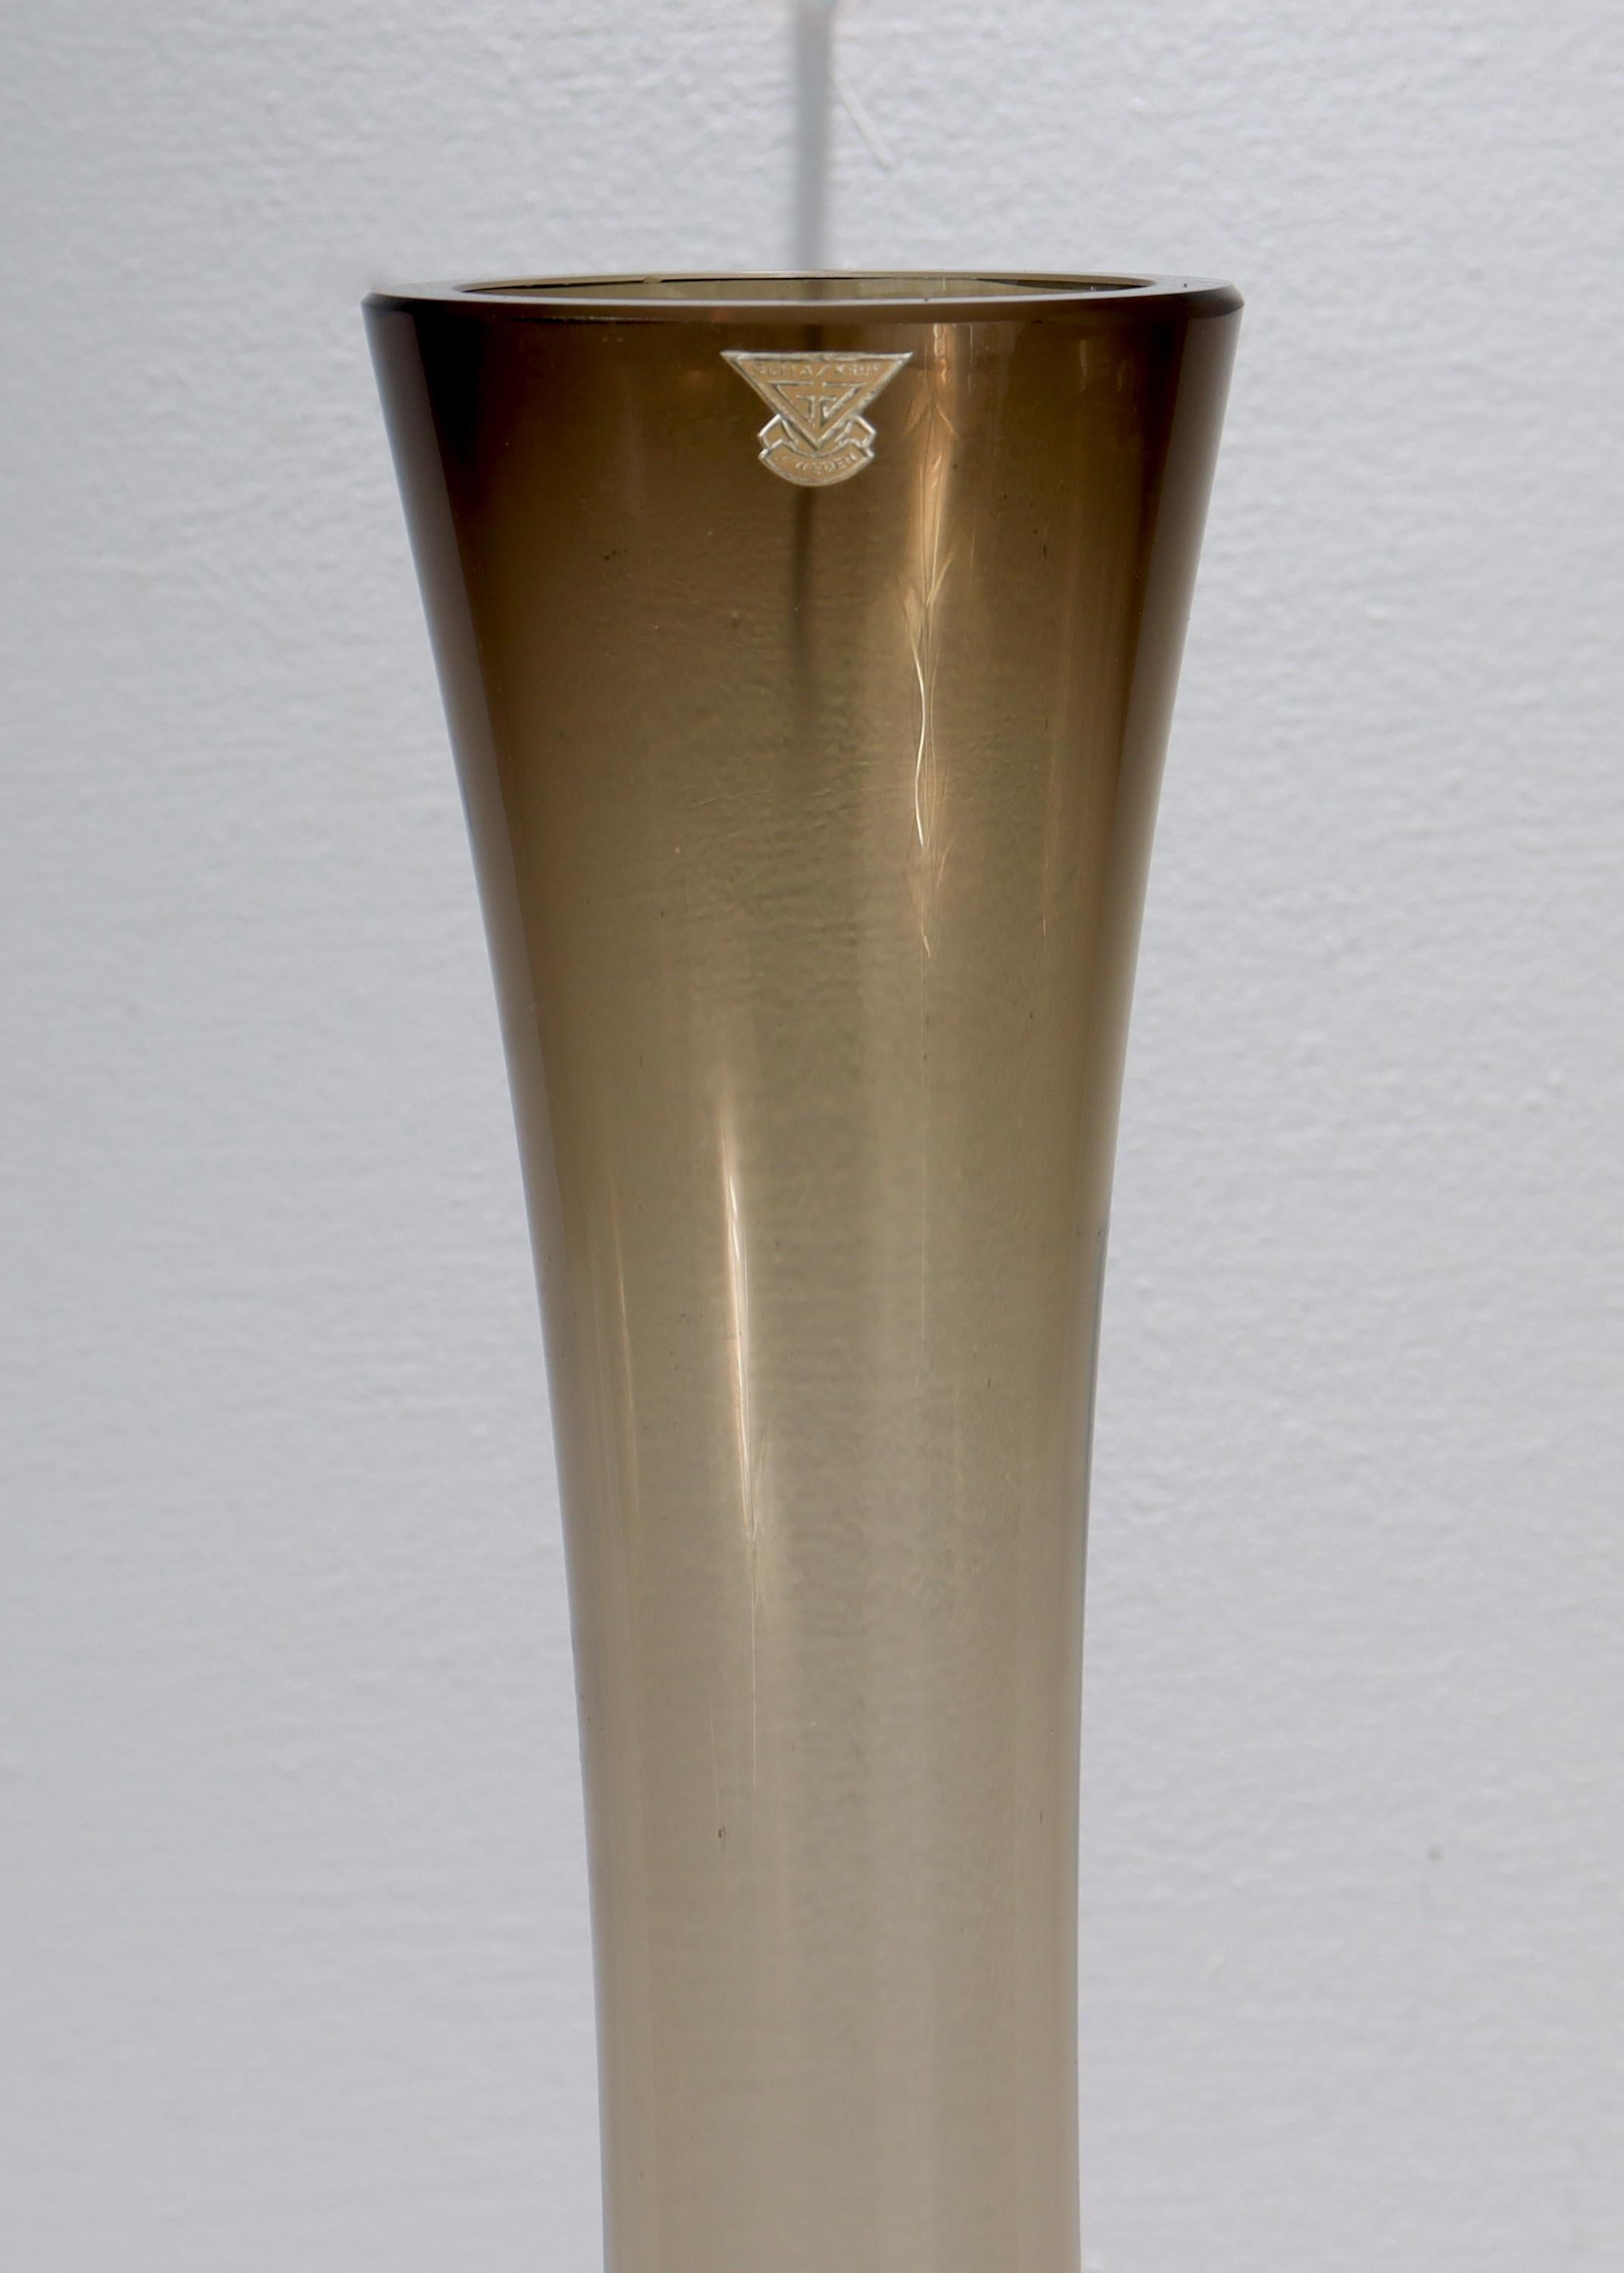 20th Century Very Large Labeled Gullaskruf Mid-Century Modern Swedish Art Glass Vase For Sale